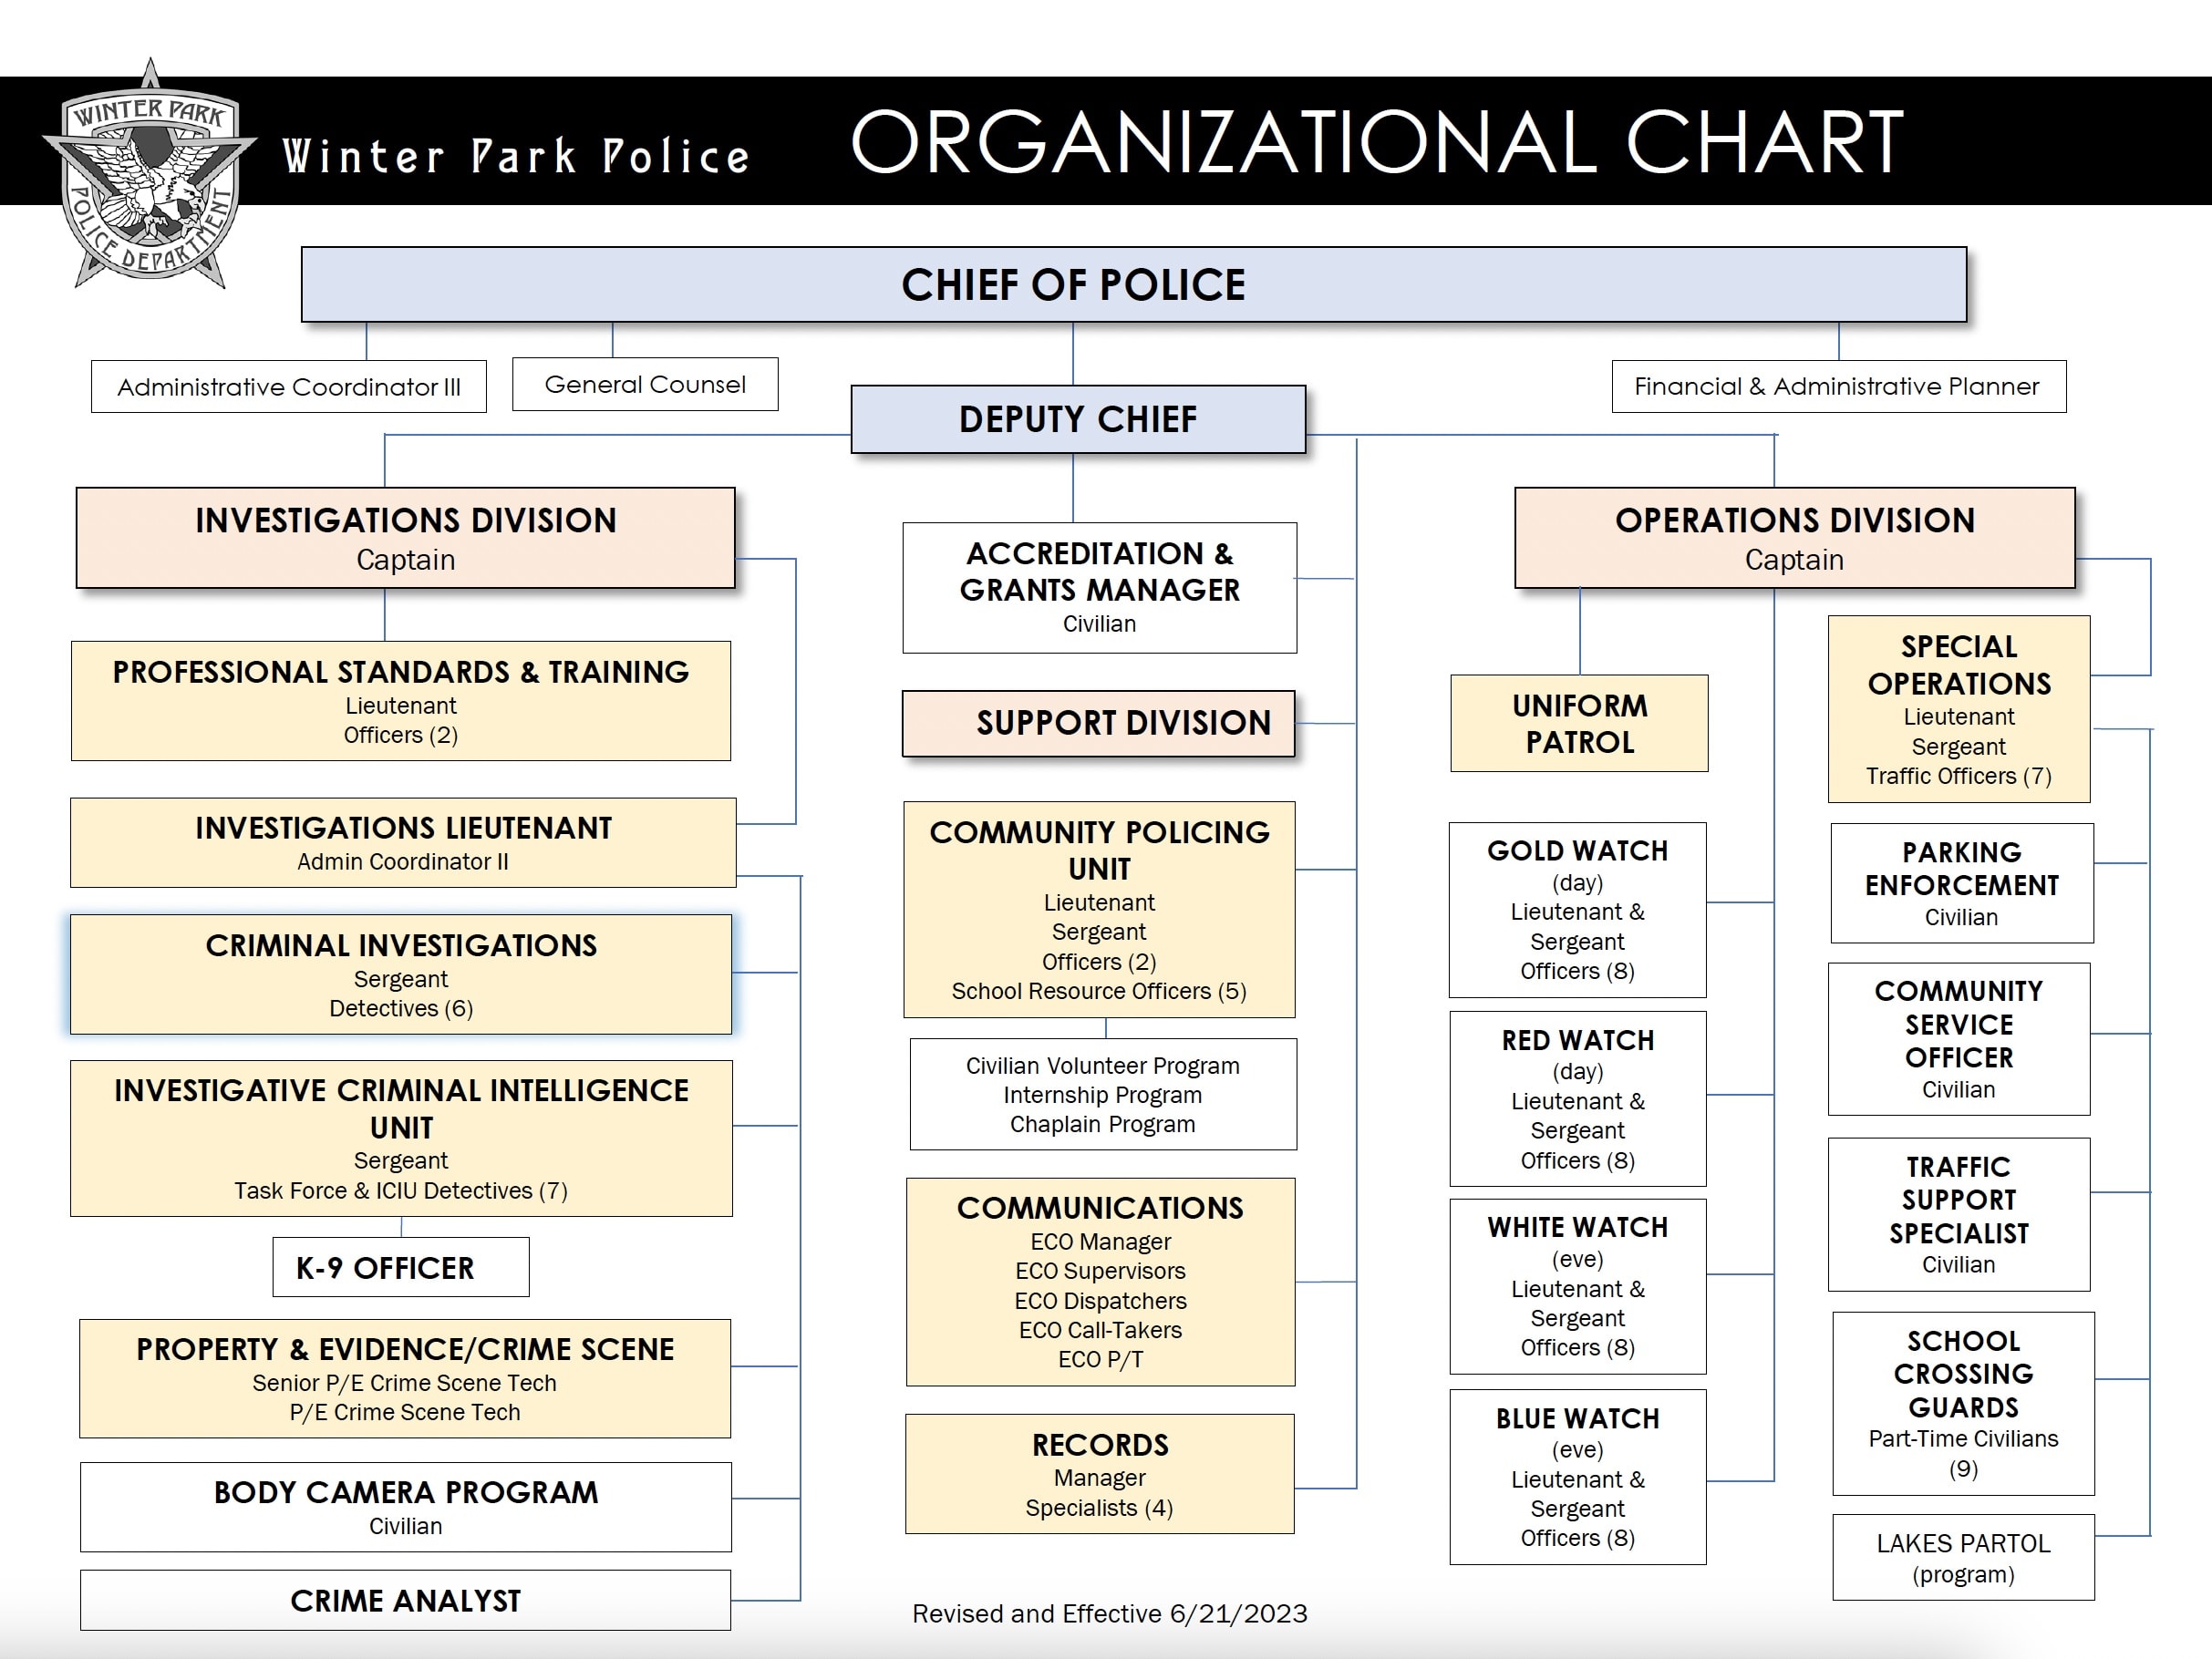 WPPD Organizational Chart